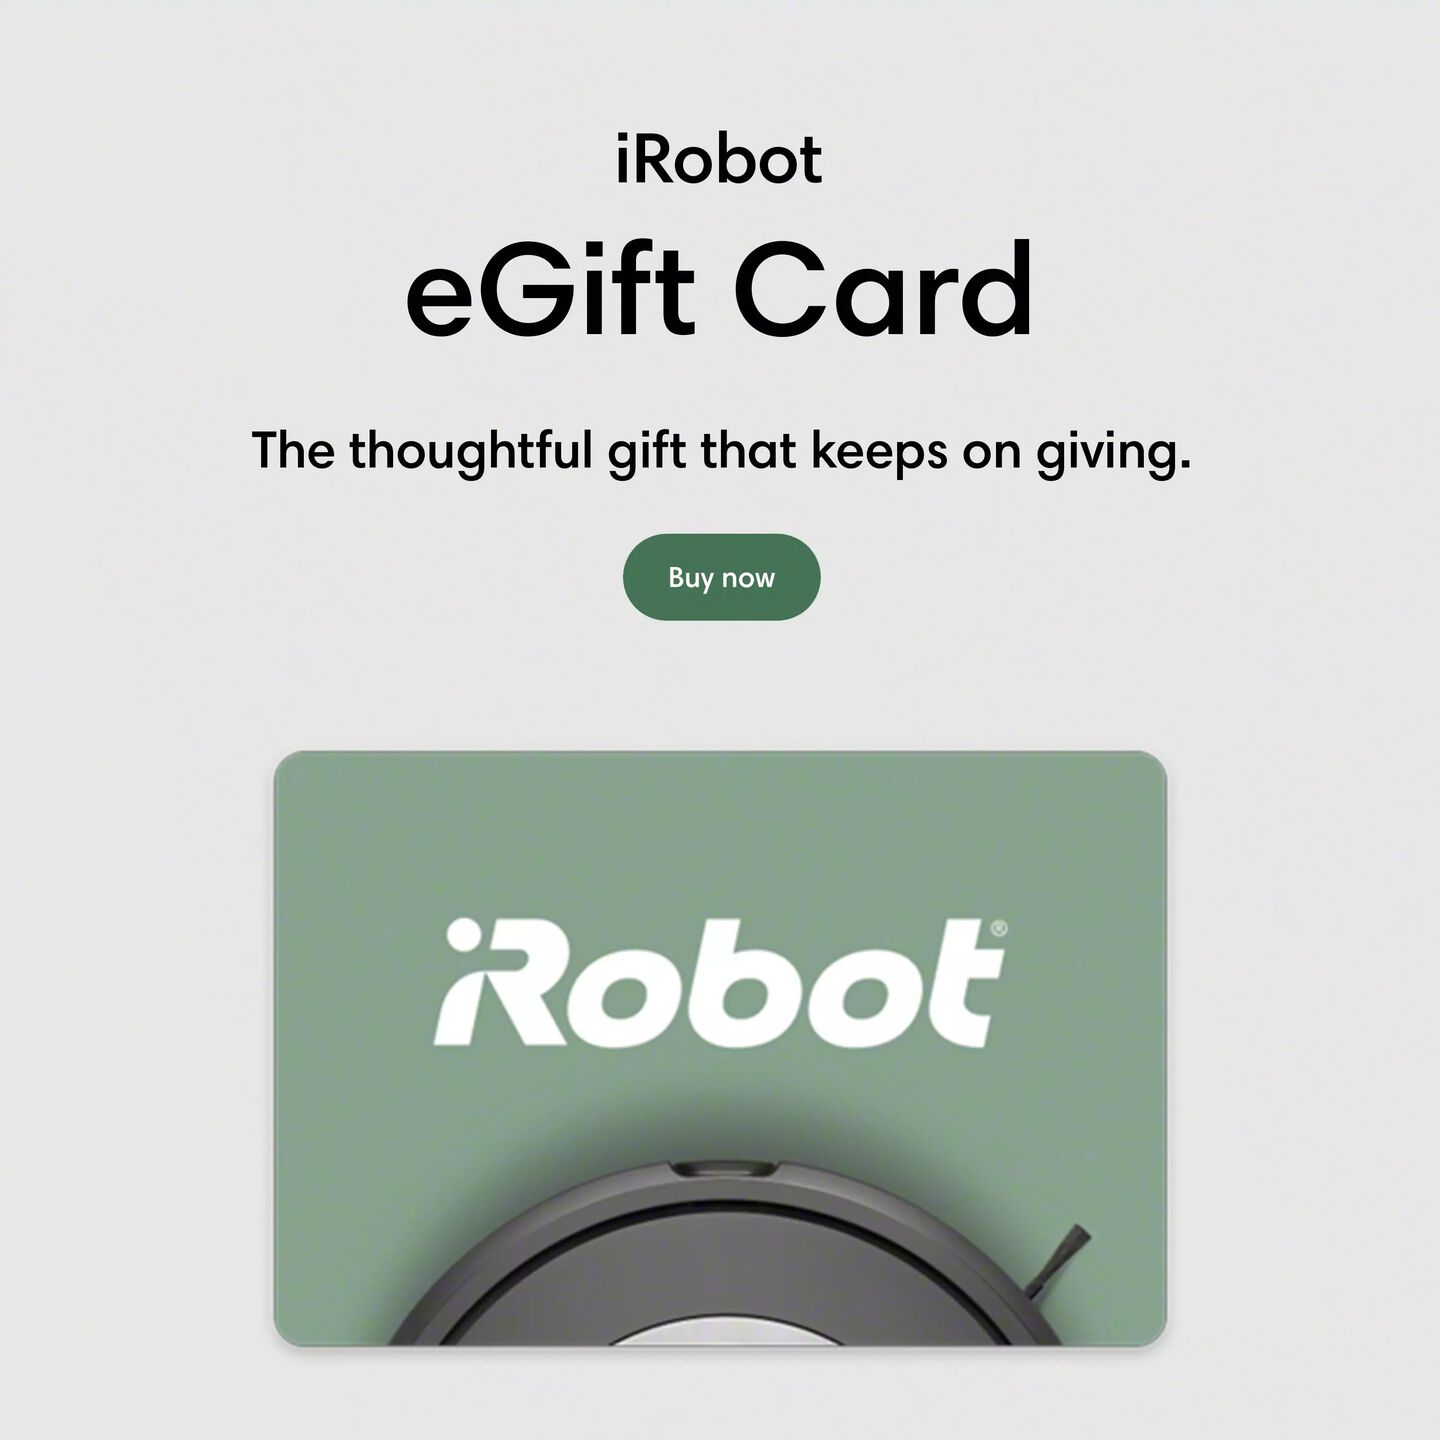 iRobot eGift Card | The thoughtful gift that keeps on giving | Buy now | iRobot Gift Card